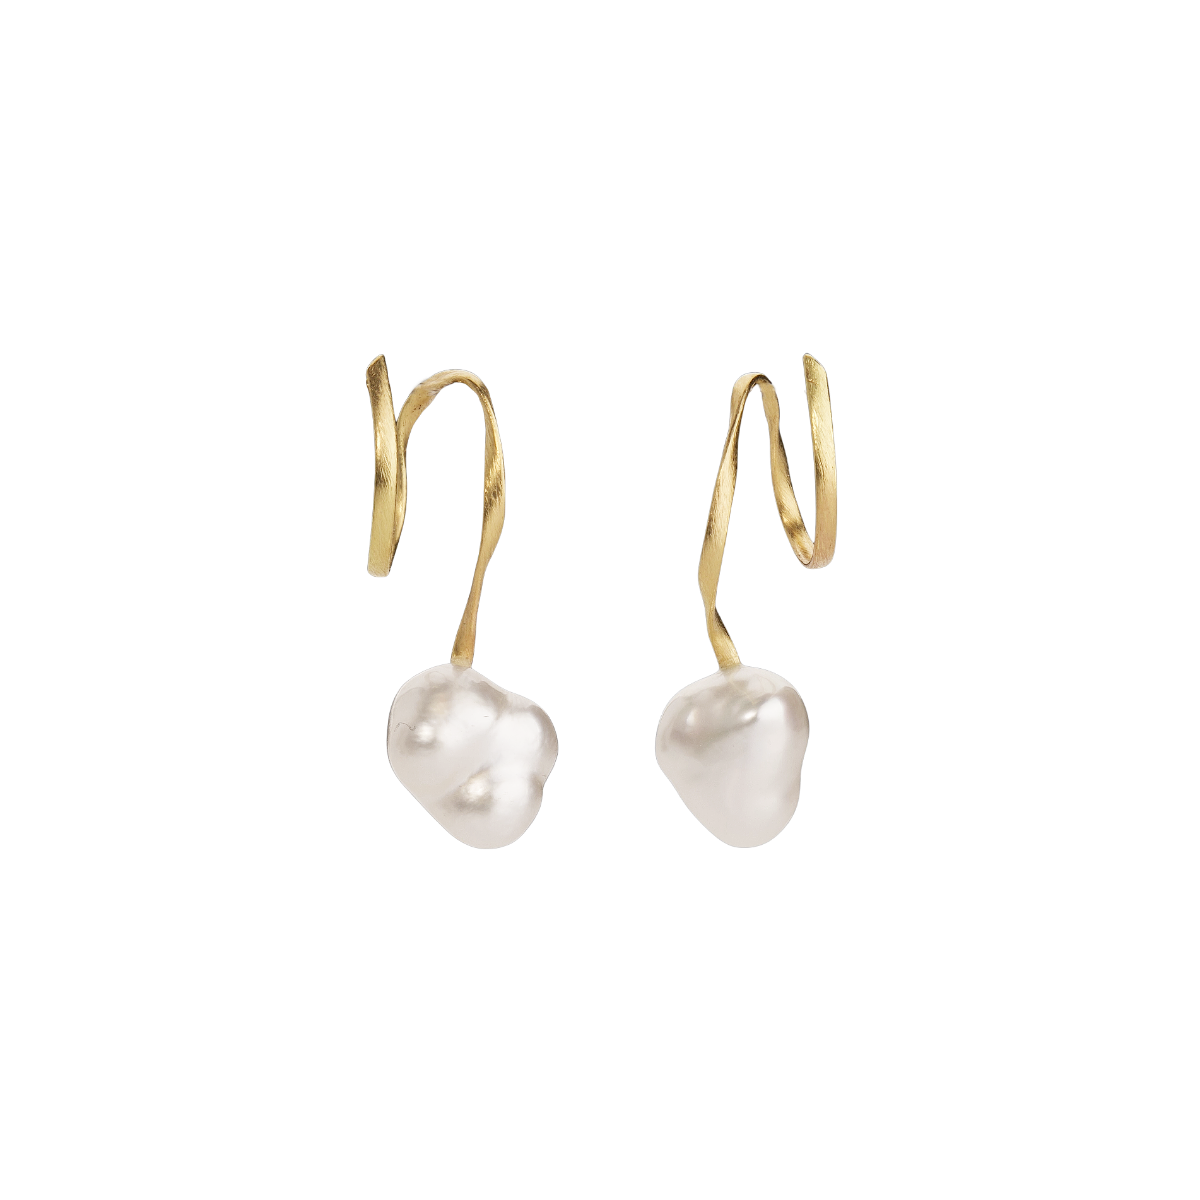 Flair earrings - 18 kt. gold & South sea keshi pearls